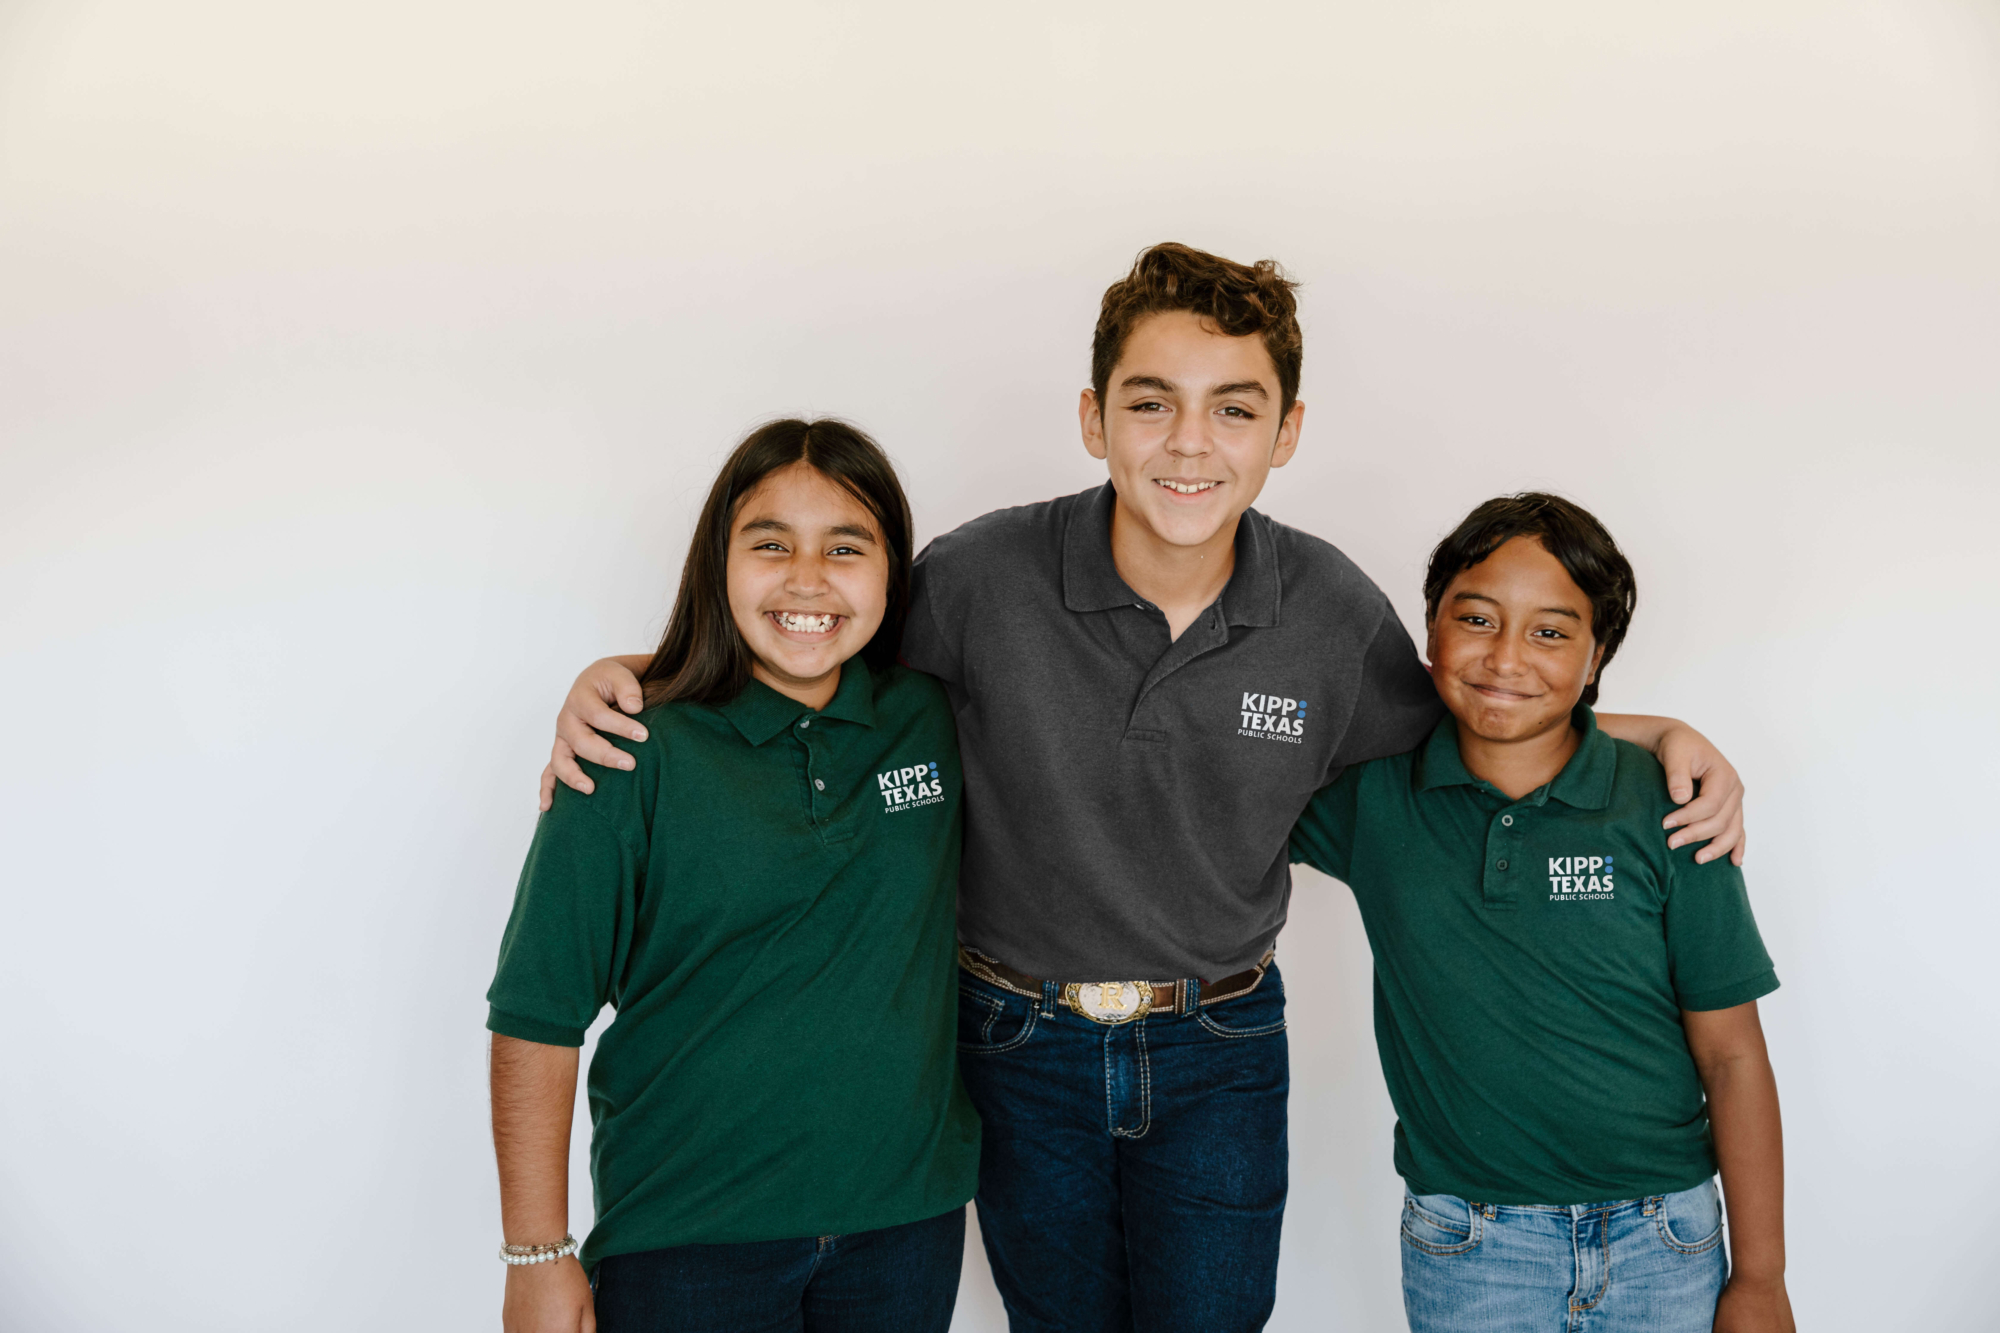 three children smiling with KIPP: Texas shirts on